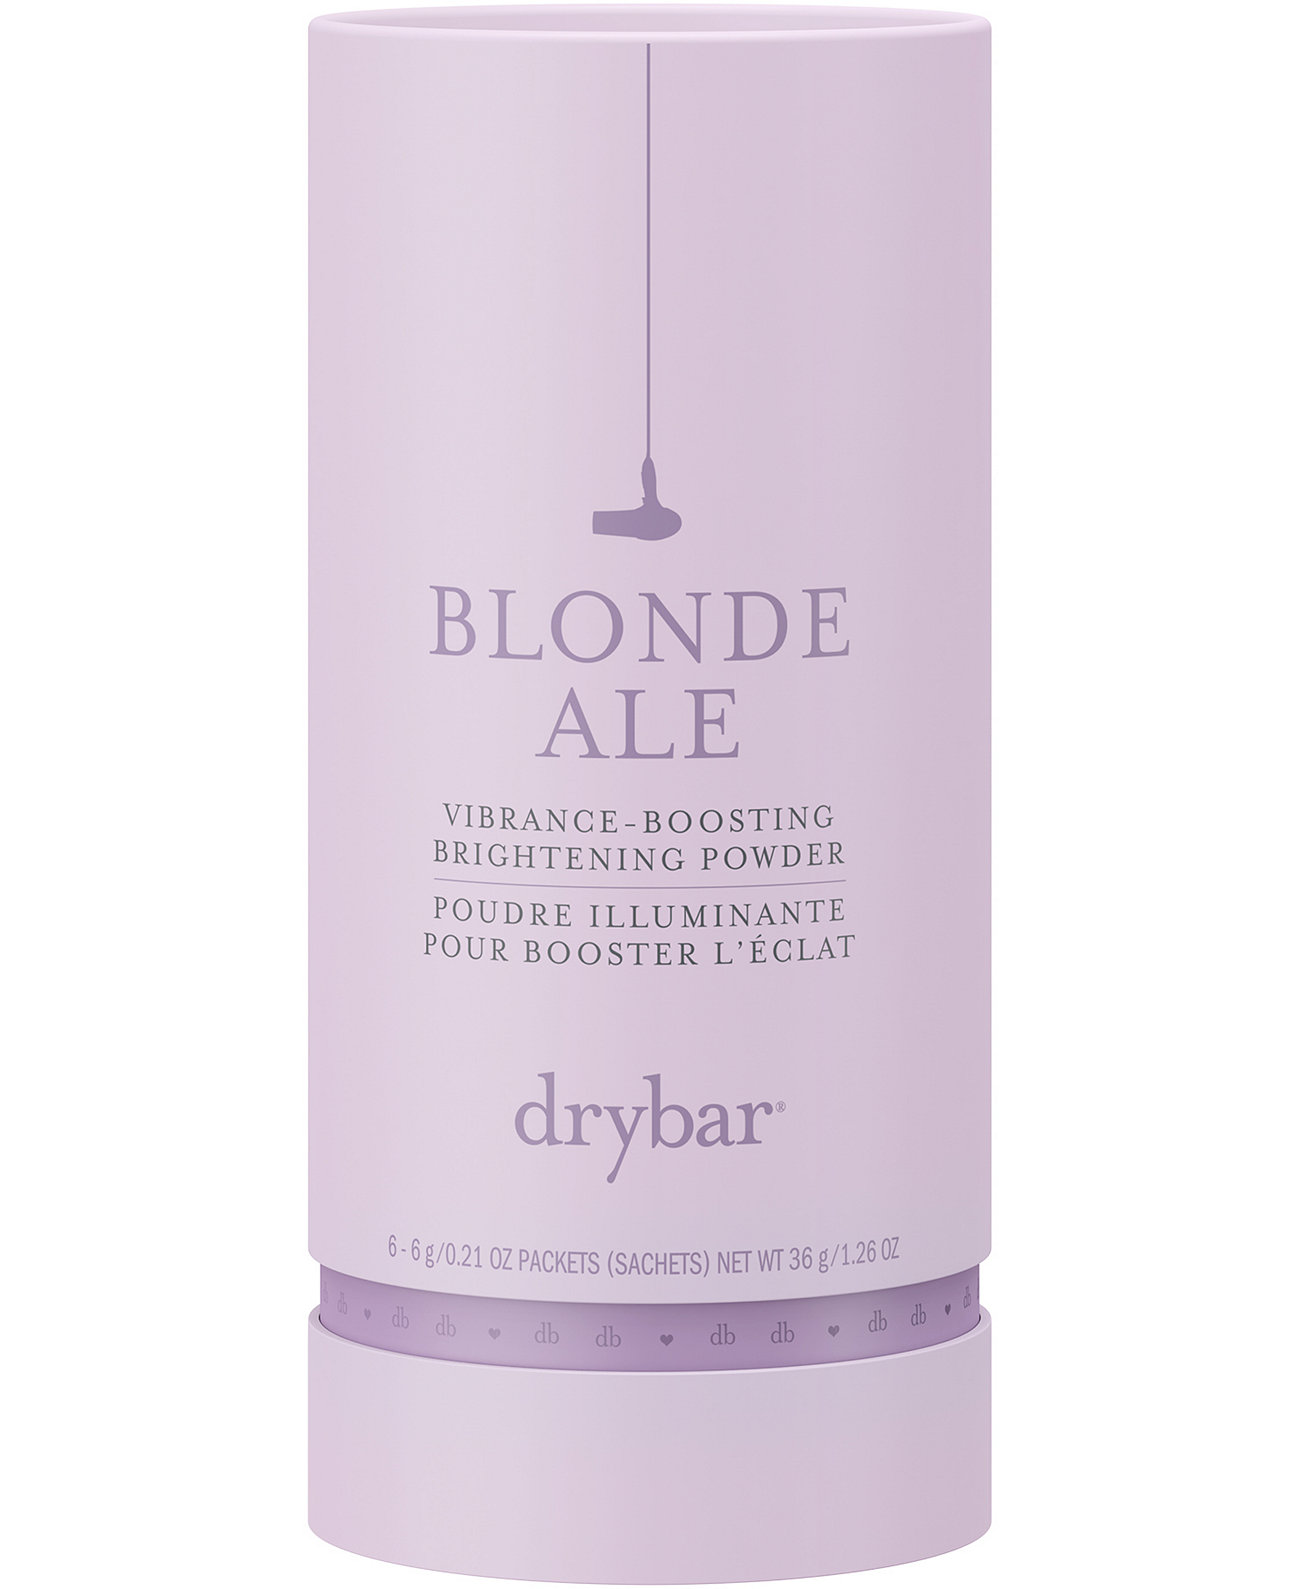 Blonde Ale Vibrance-Boosting Осветляющий порошок, 6 шт. DRYBAR